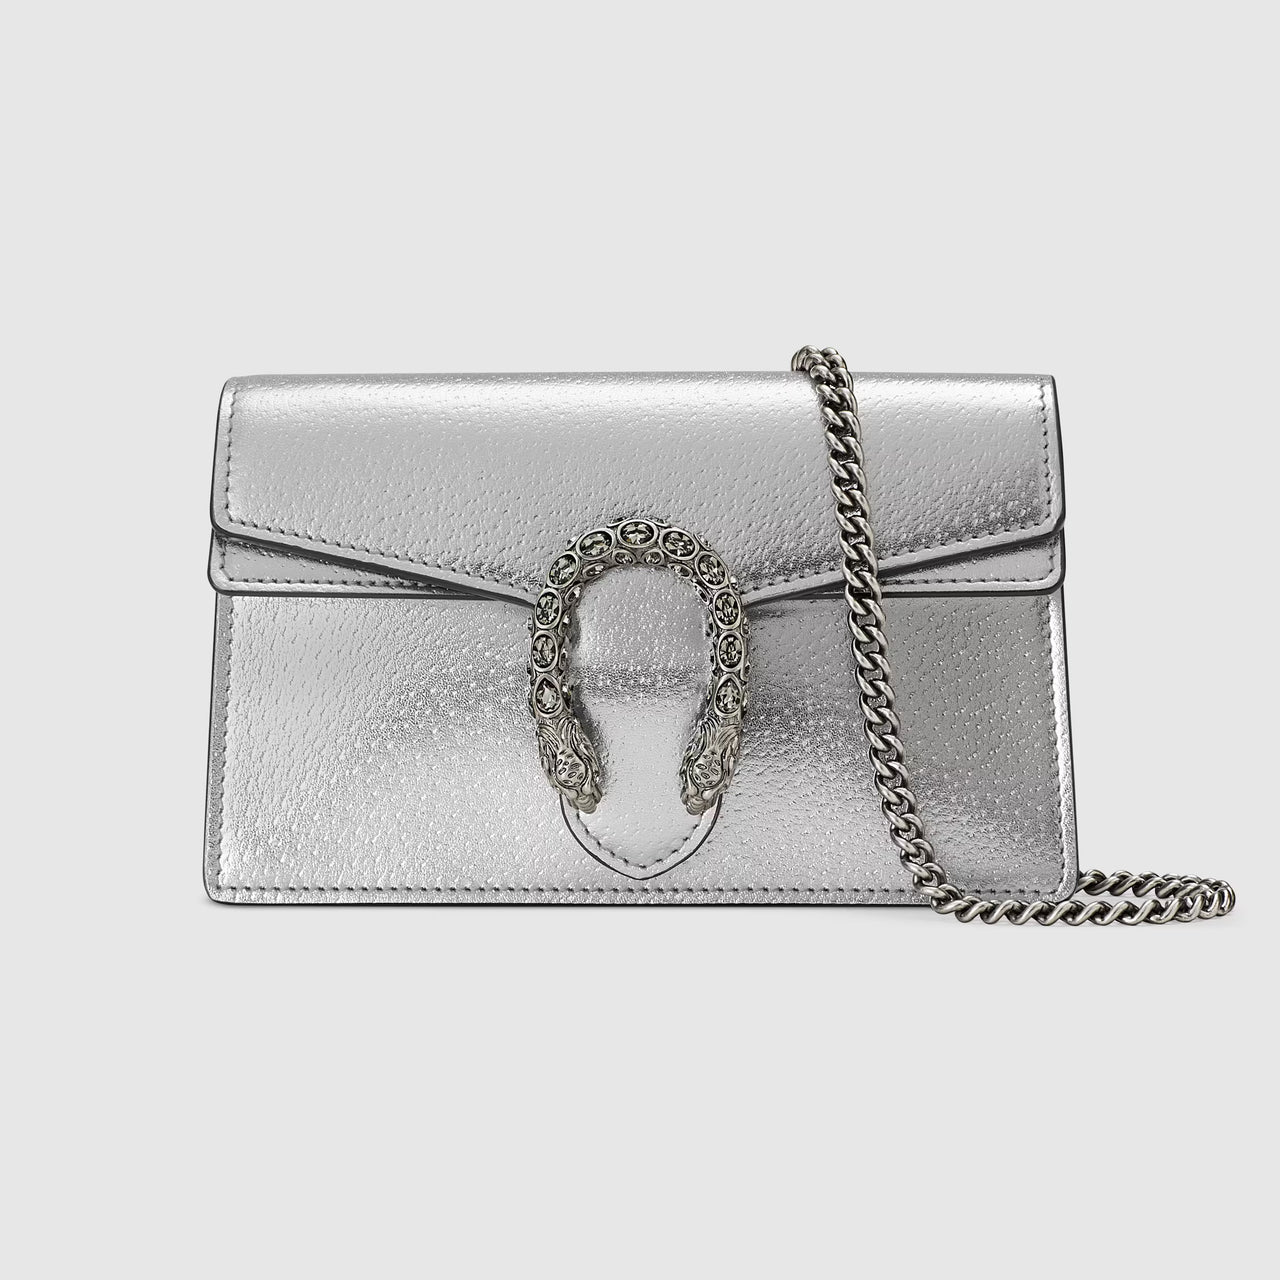 Gucci Dionysus Super Mini Leather Bag (Silver Lamé Leather)